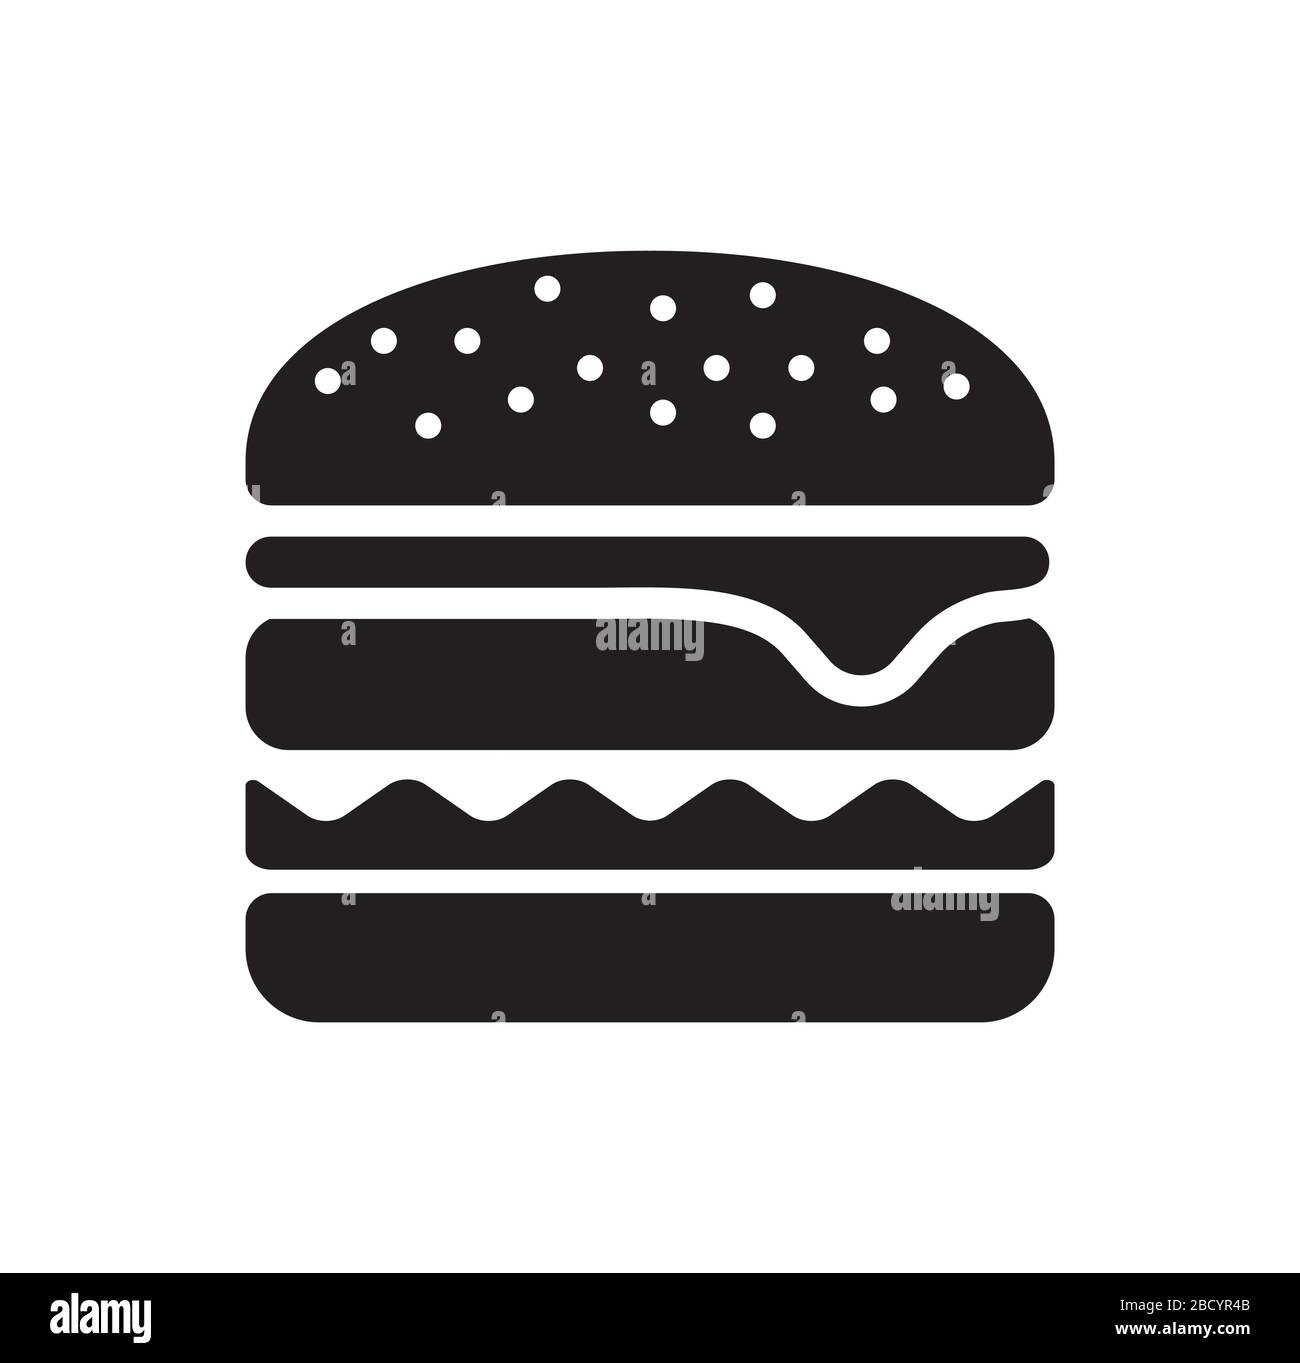 hamburger / junk food icon Stock Vector